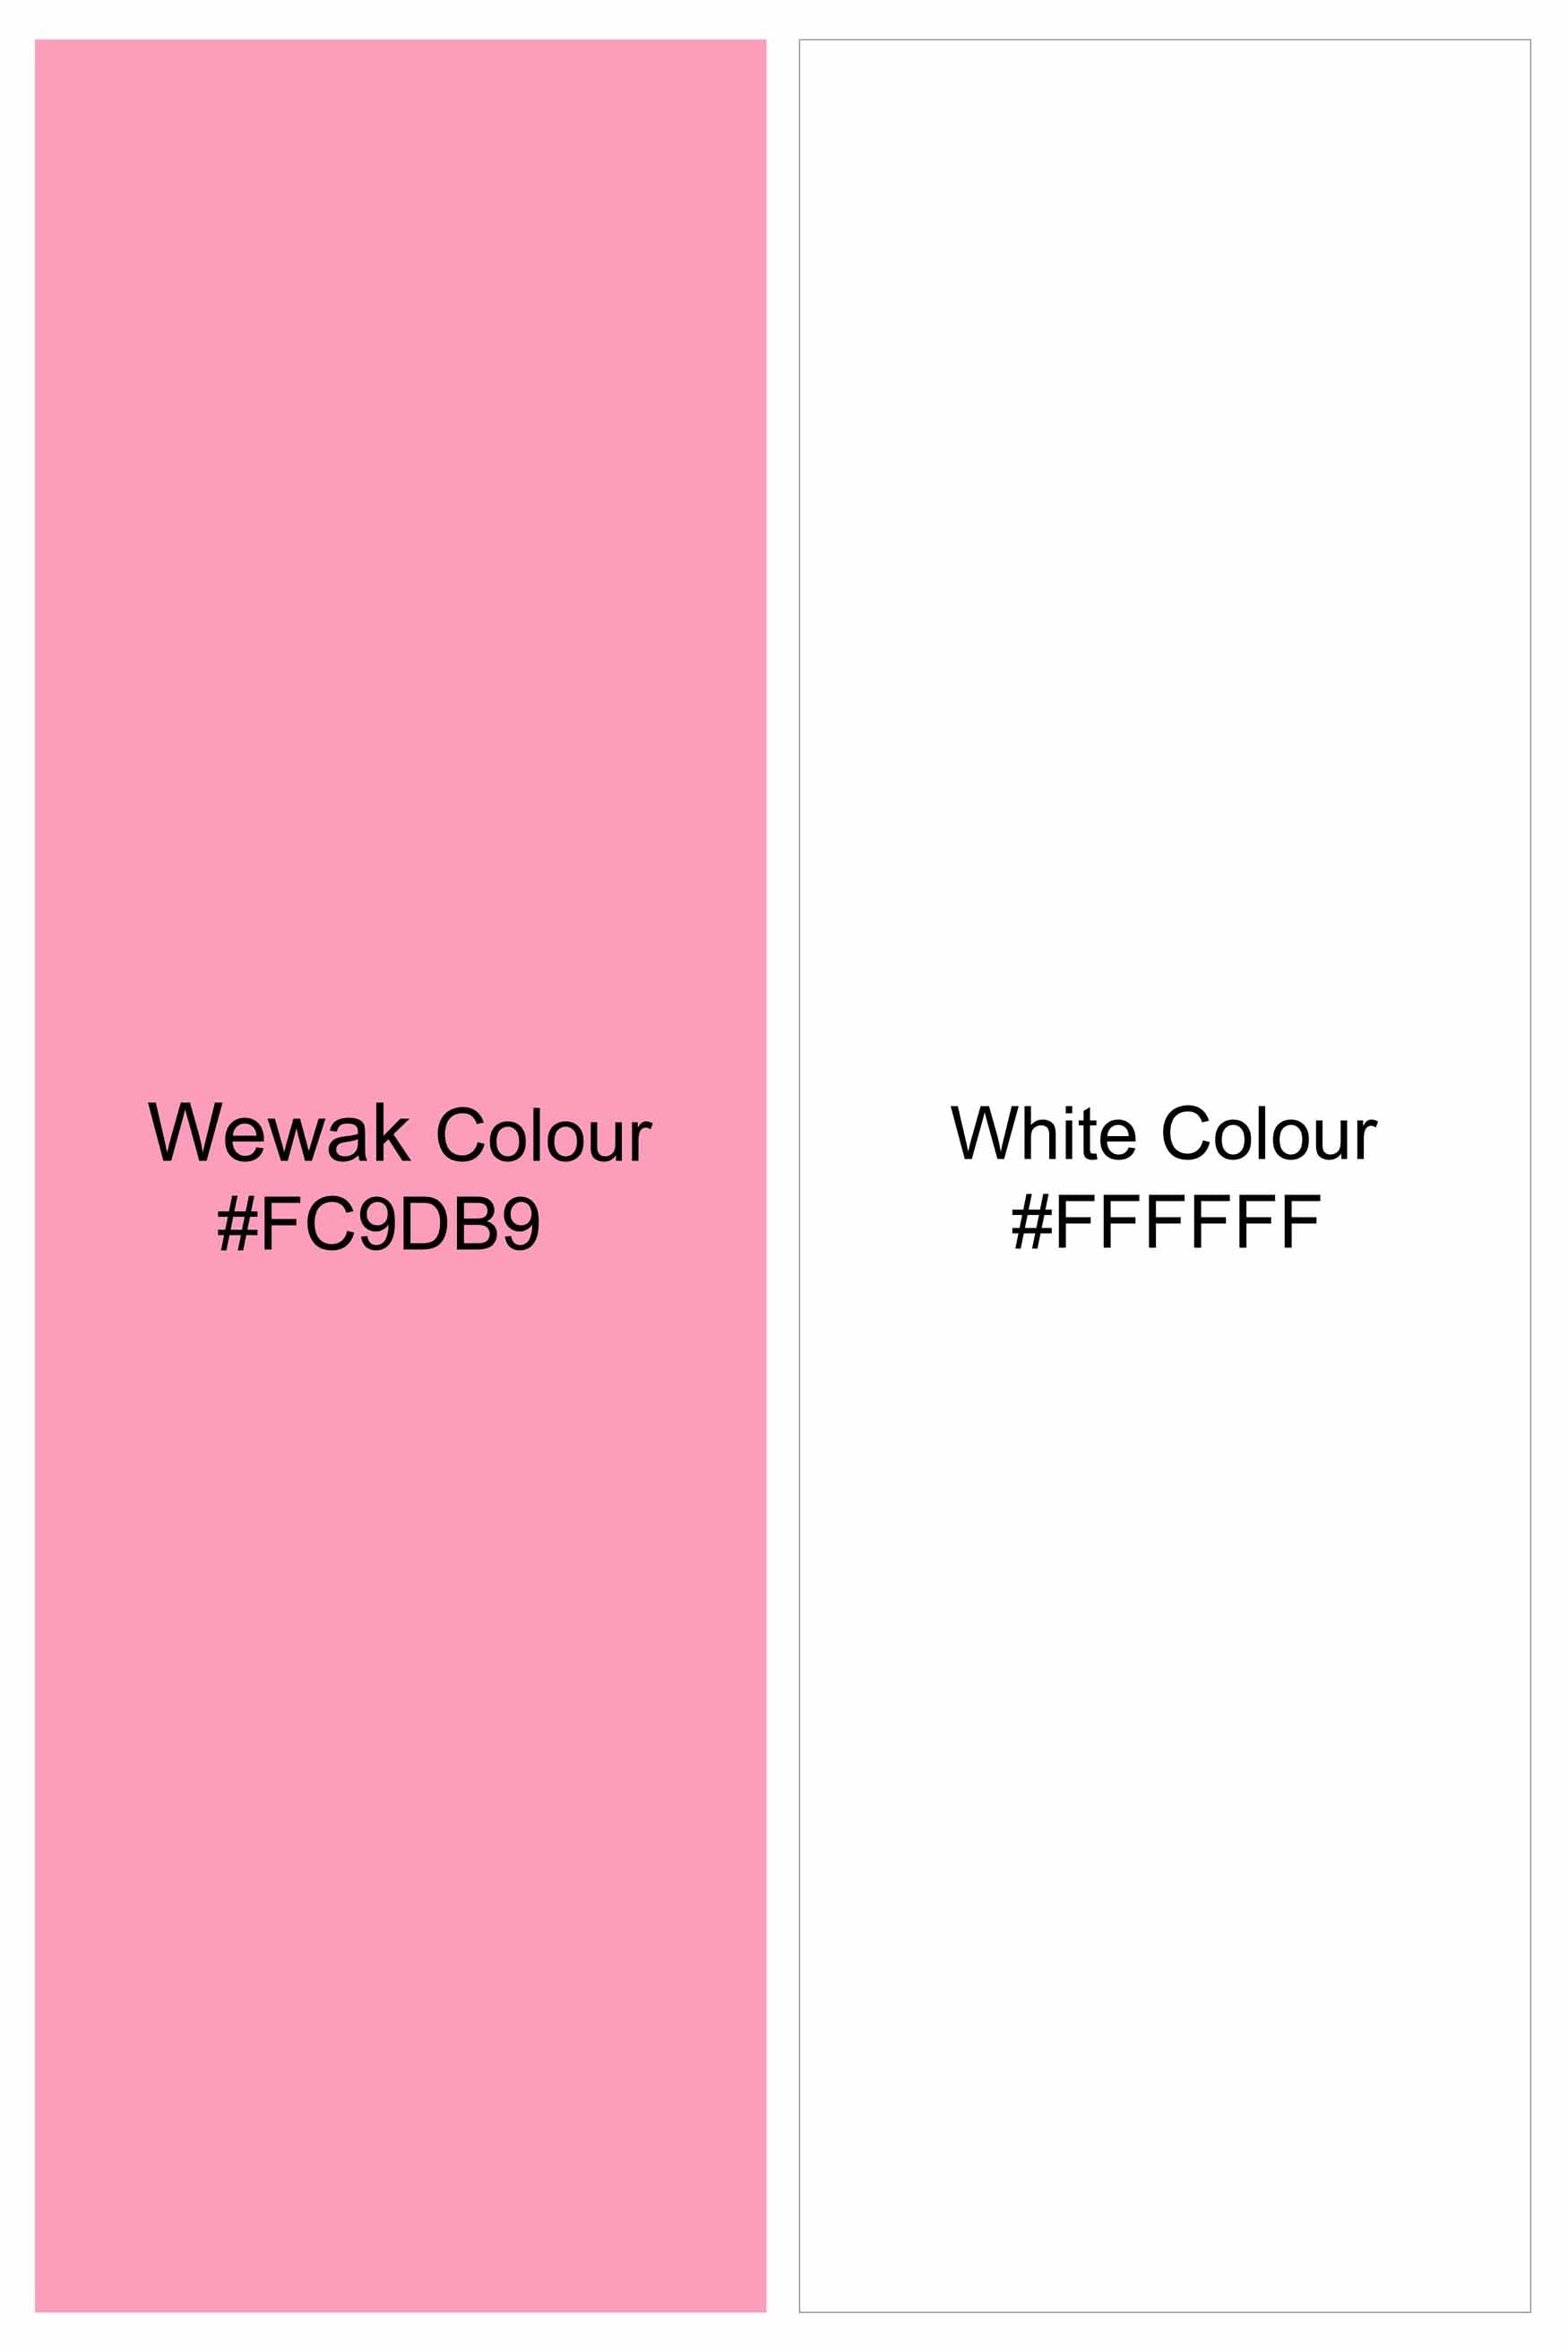 Wewak Pink and Bright White Leaves Printed Premium Tencel Shirt 11410-38, 11410-H-38, 11410-39, 11410-H-39, 11410-40, 11410-H-40, 11410-42, 11410-H-42, 11410-44, 11410-H-44, 11410-46, 11410-H-46, 11410-48, 11410-H-48, 11410-50, 11410-H-50, 11410-52, 11410-H-52